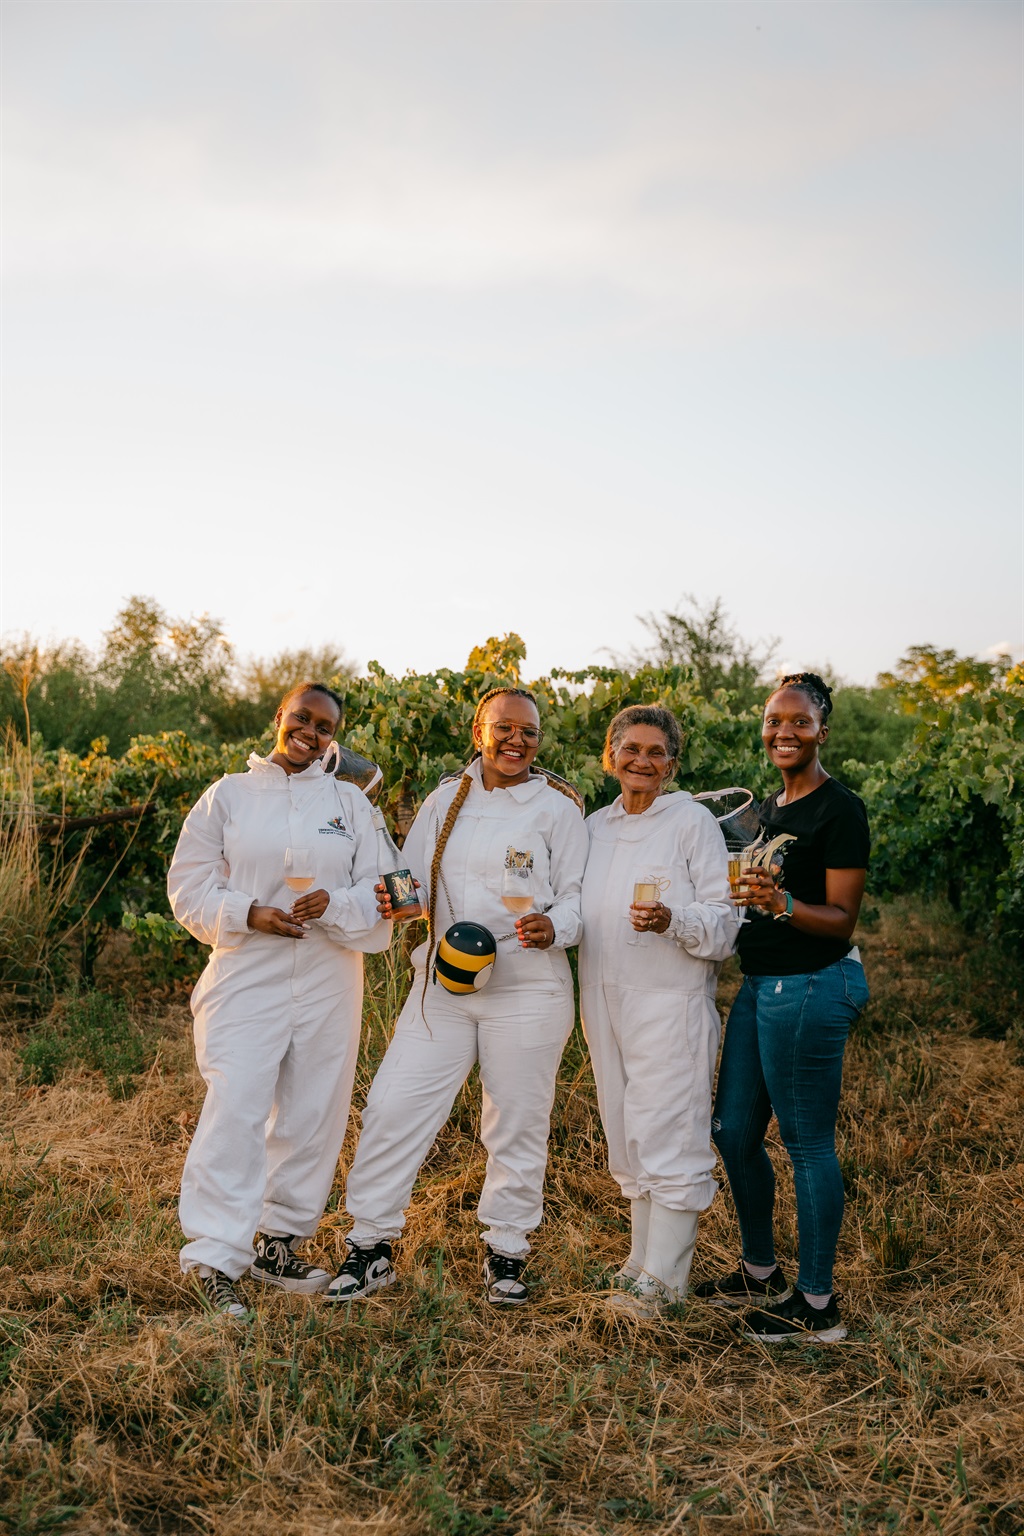 The Moedi Wines Team in the beekeeper uniforms.